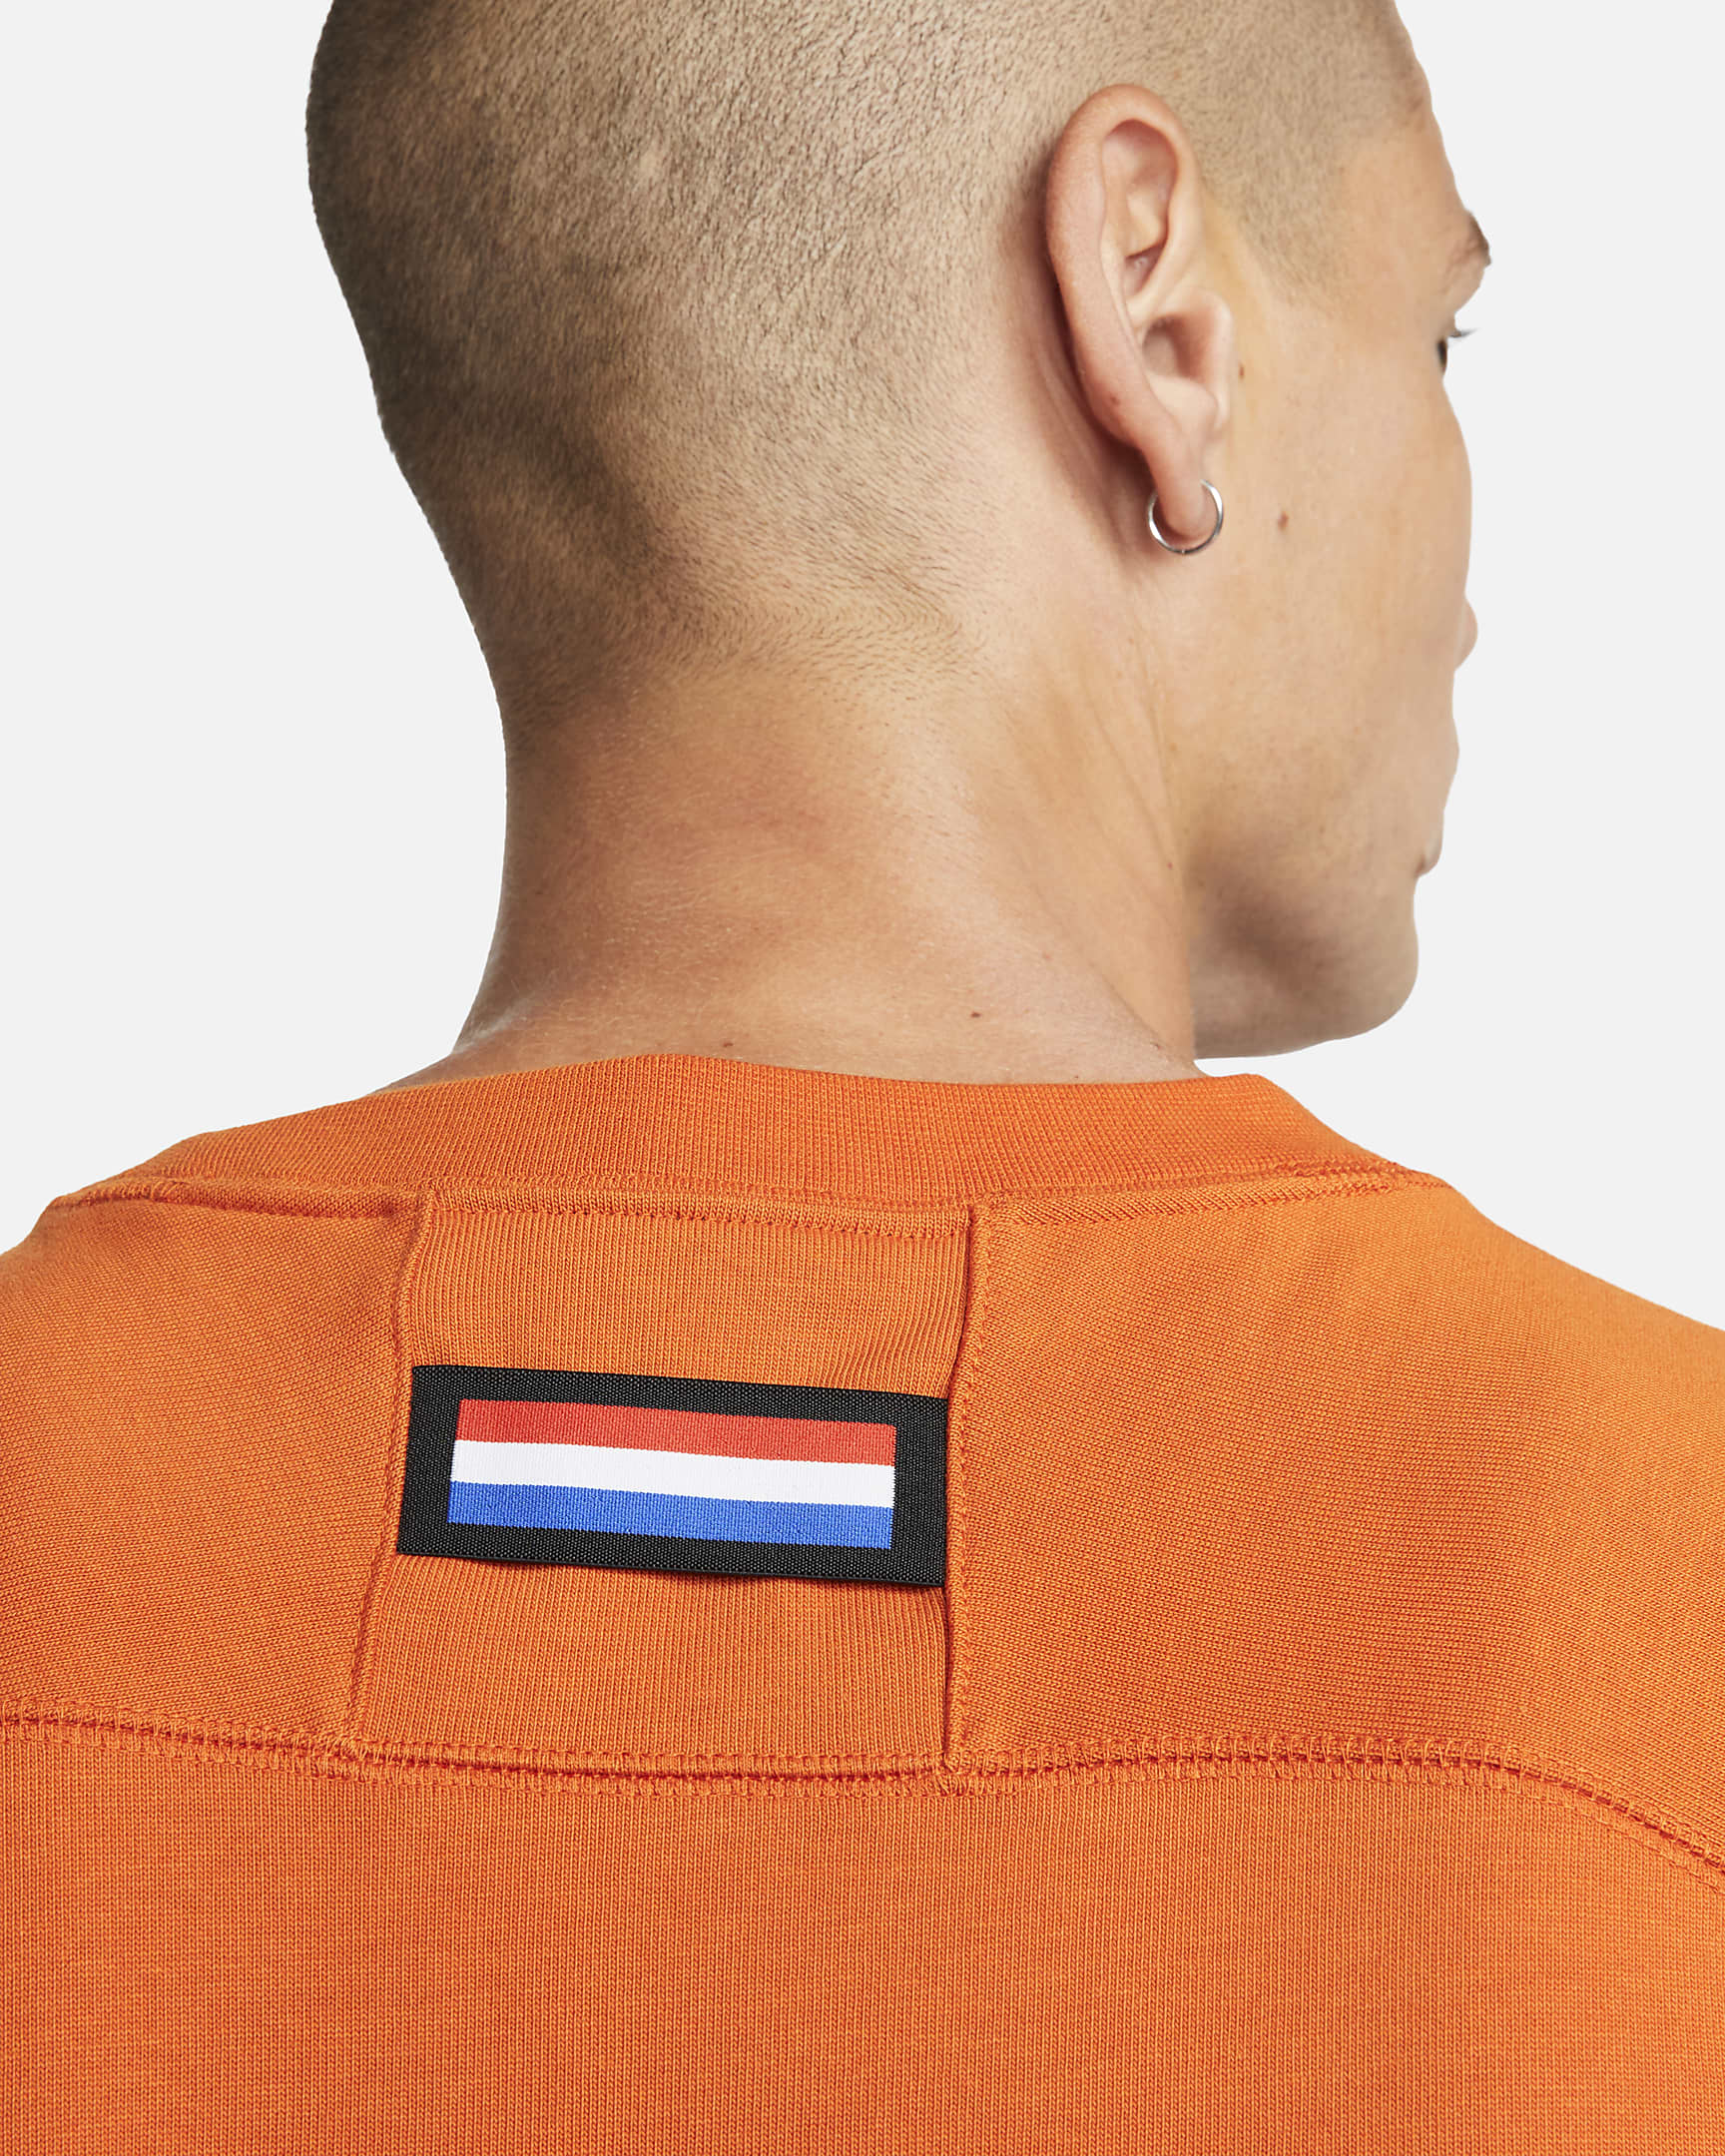 Netherlands Men's Nike Soccer Top. Nike.com